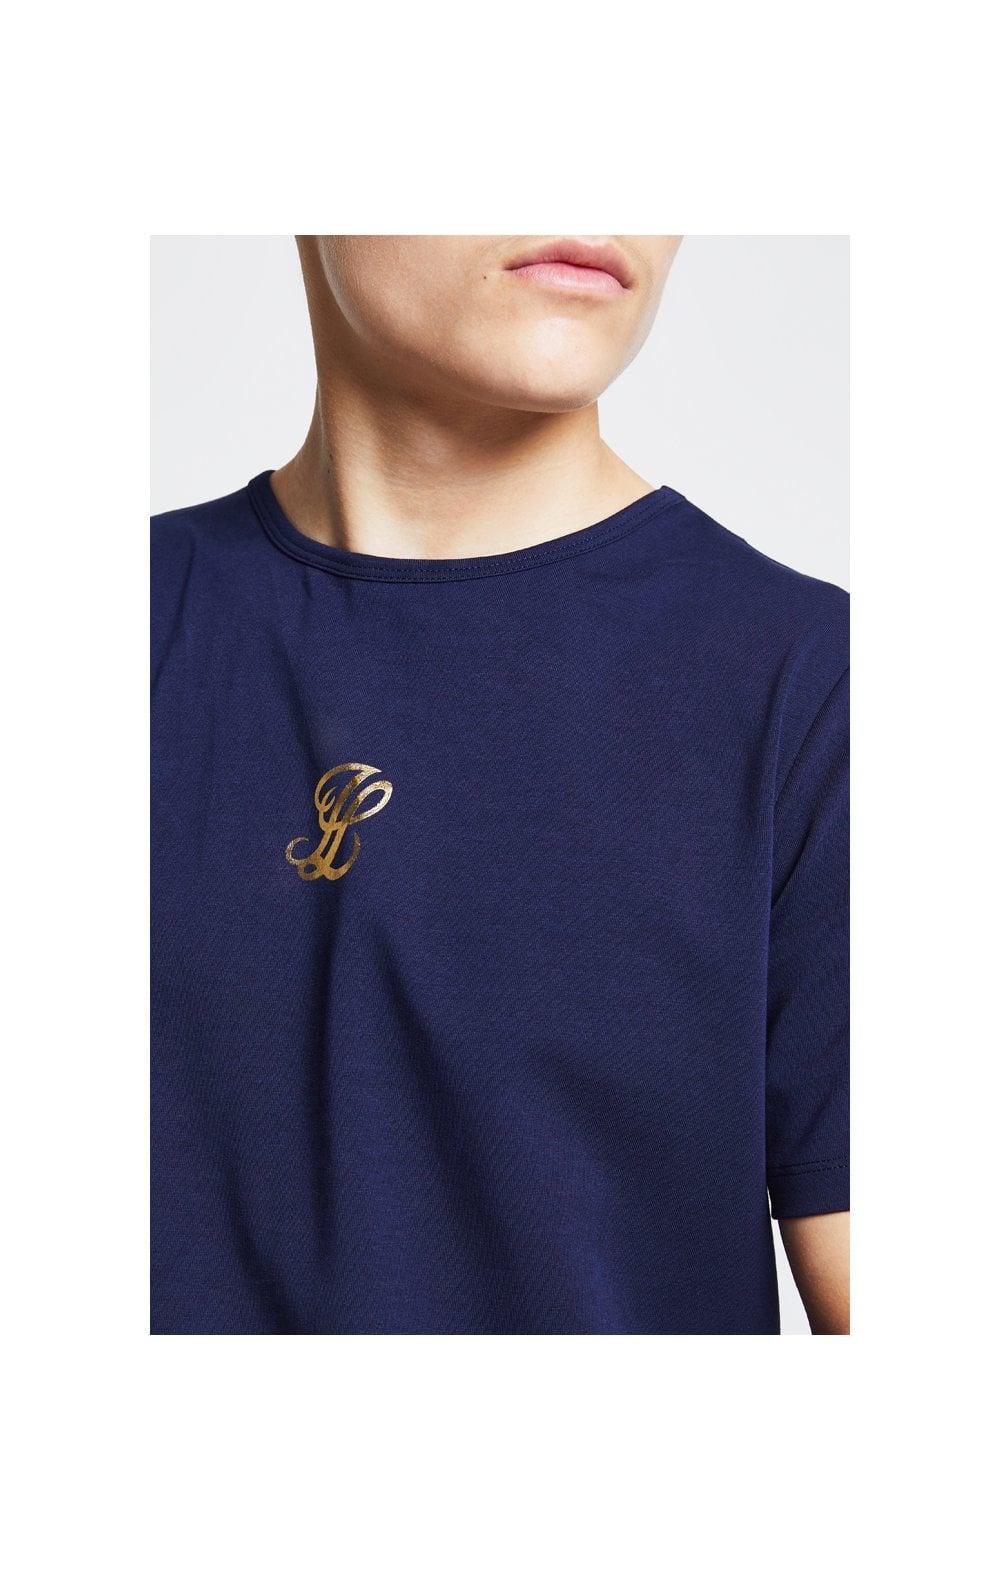 Illusive London T-Shirt Schulterfrei Marmor - Marineblau und Marmor